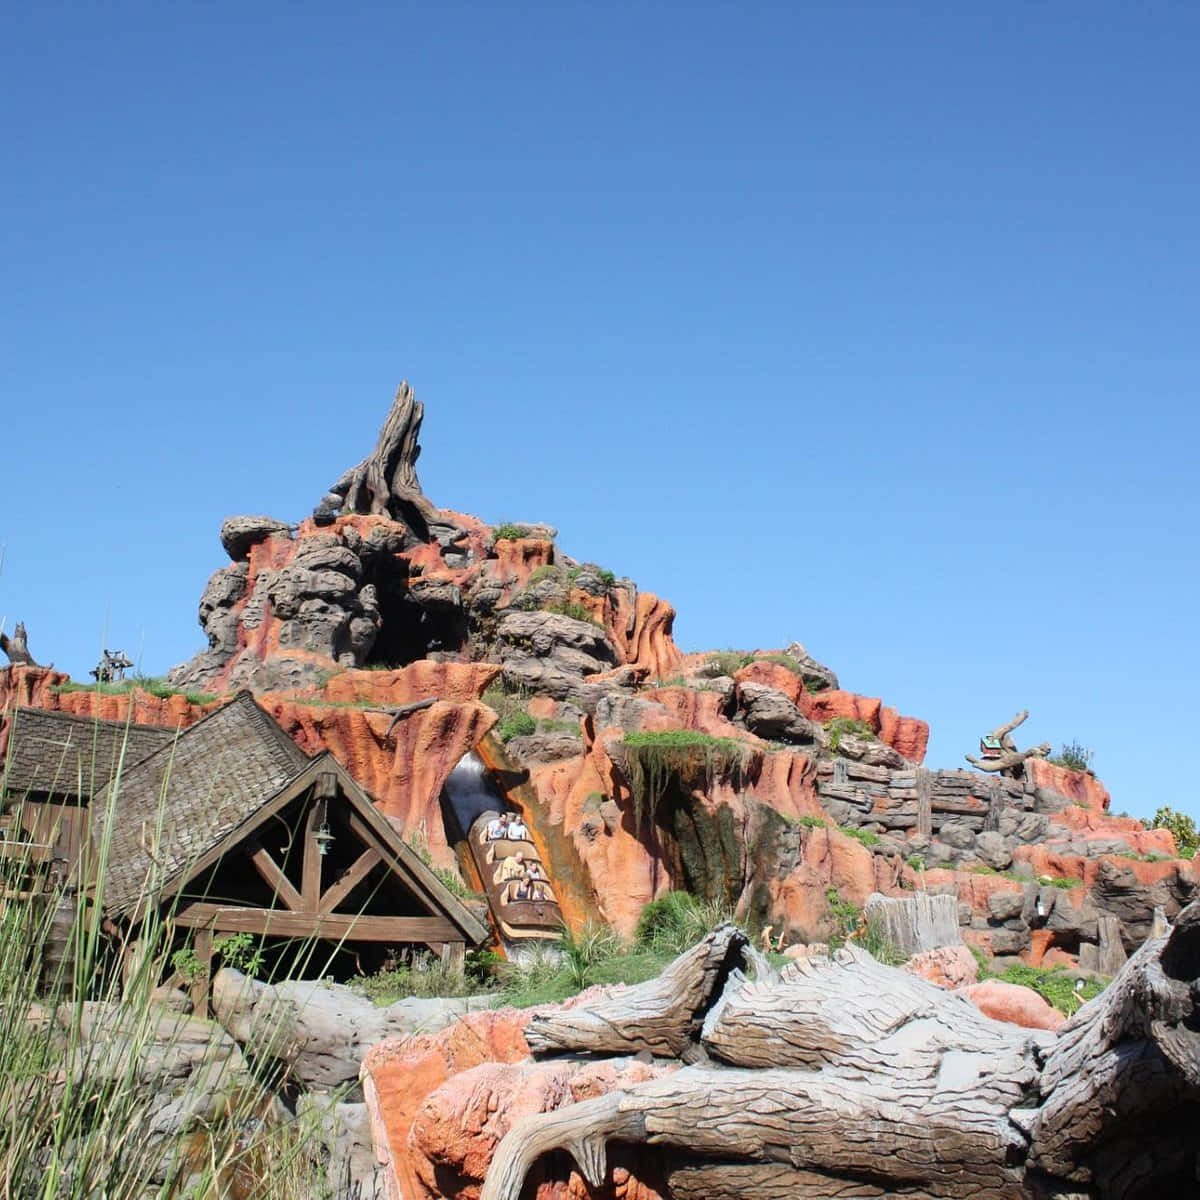 An iconic image of Splash Mountain at Walt Disney World in Orlando